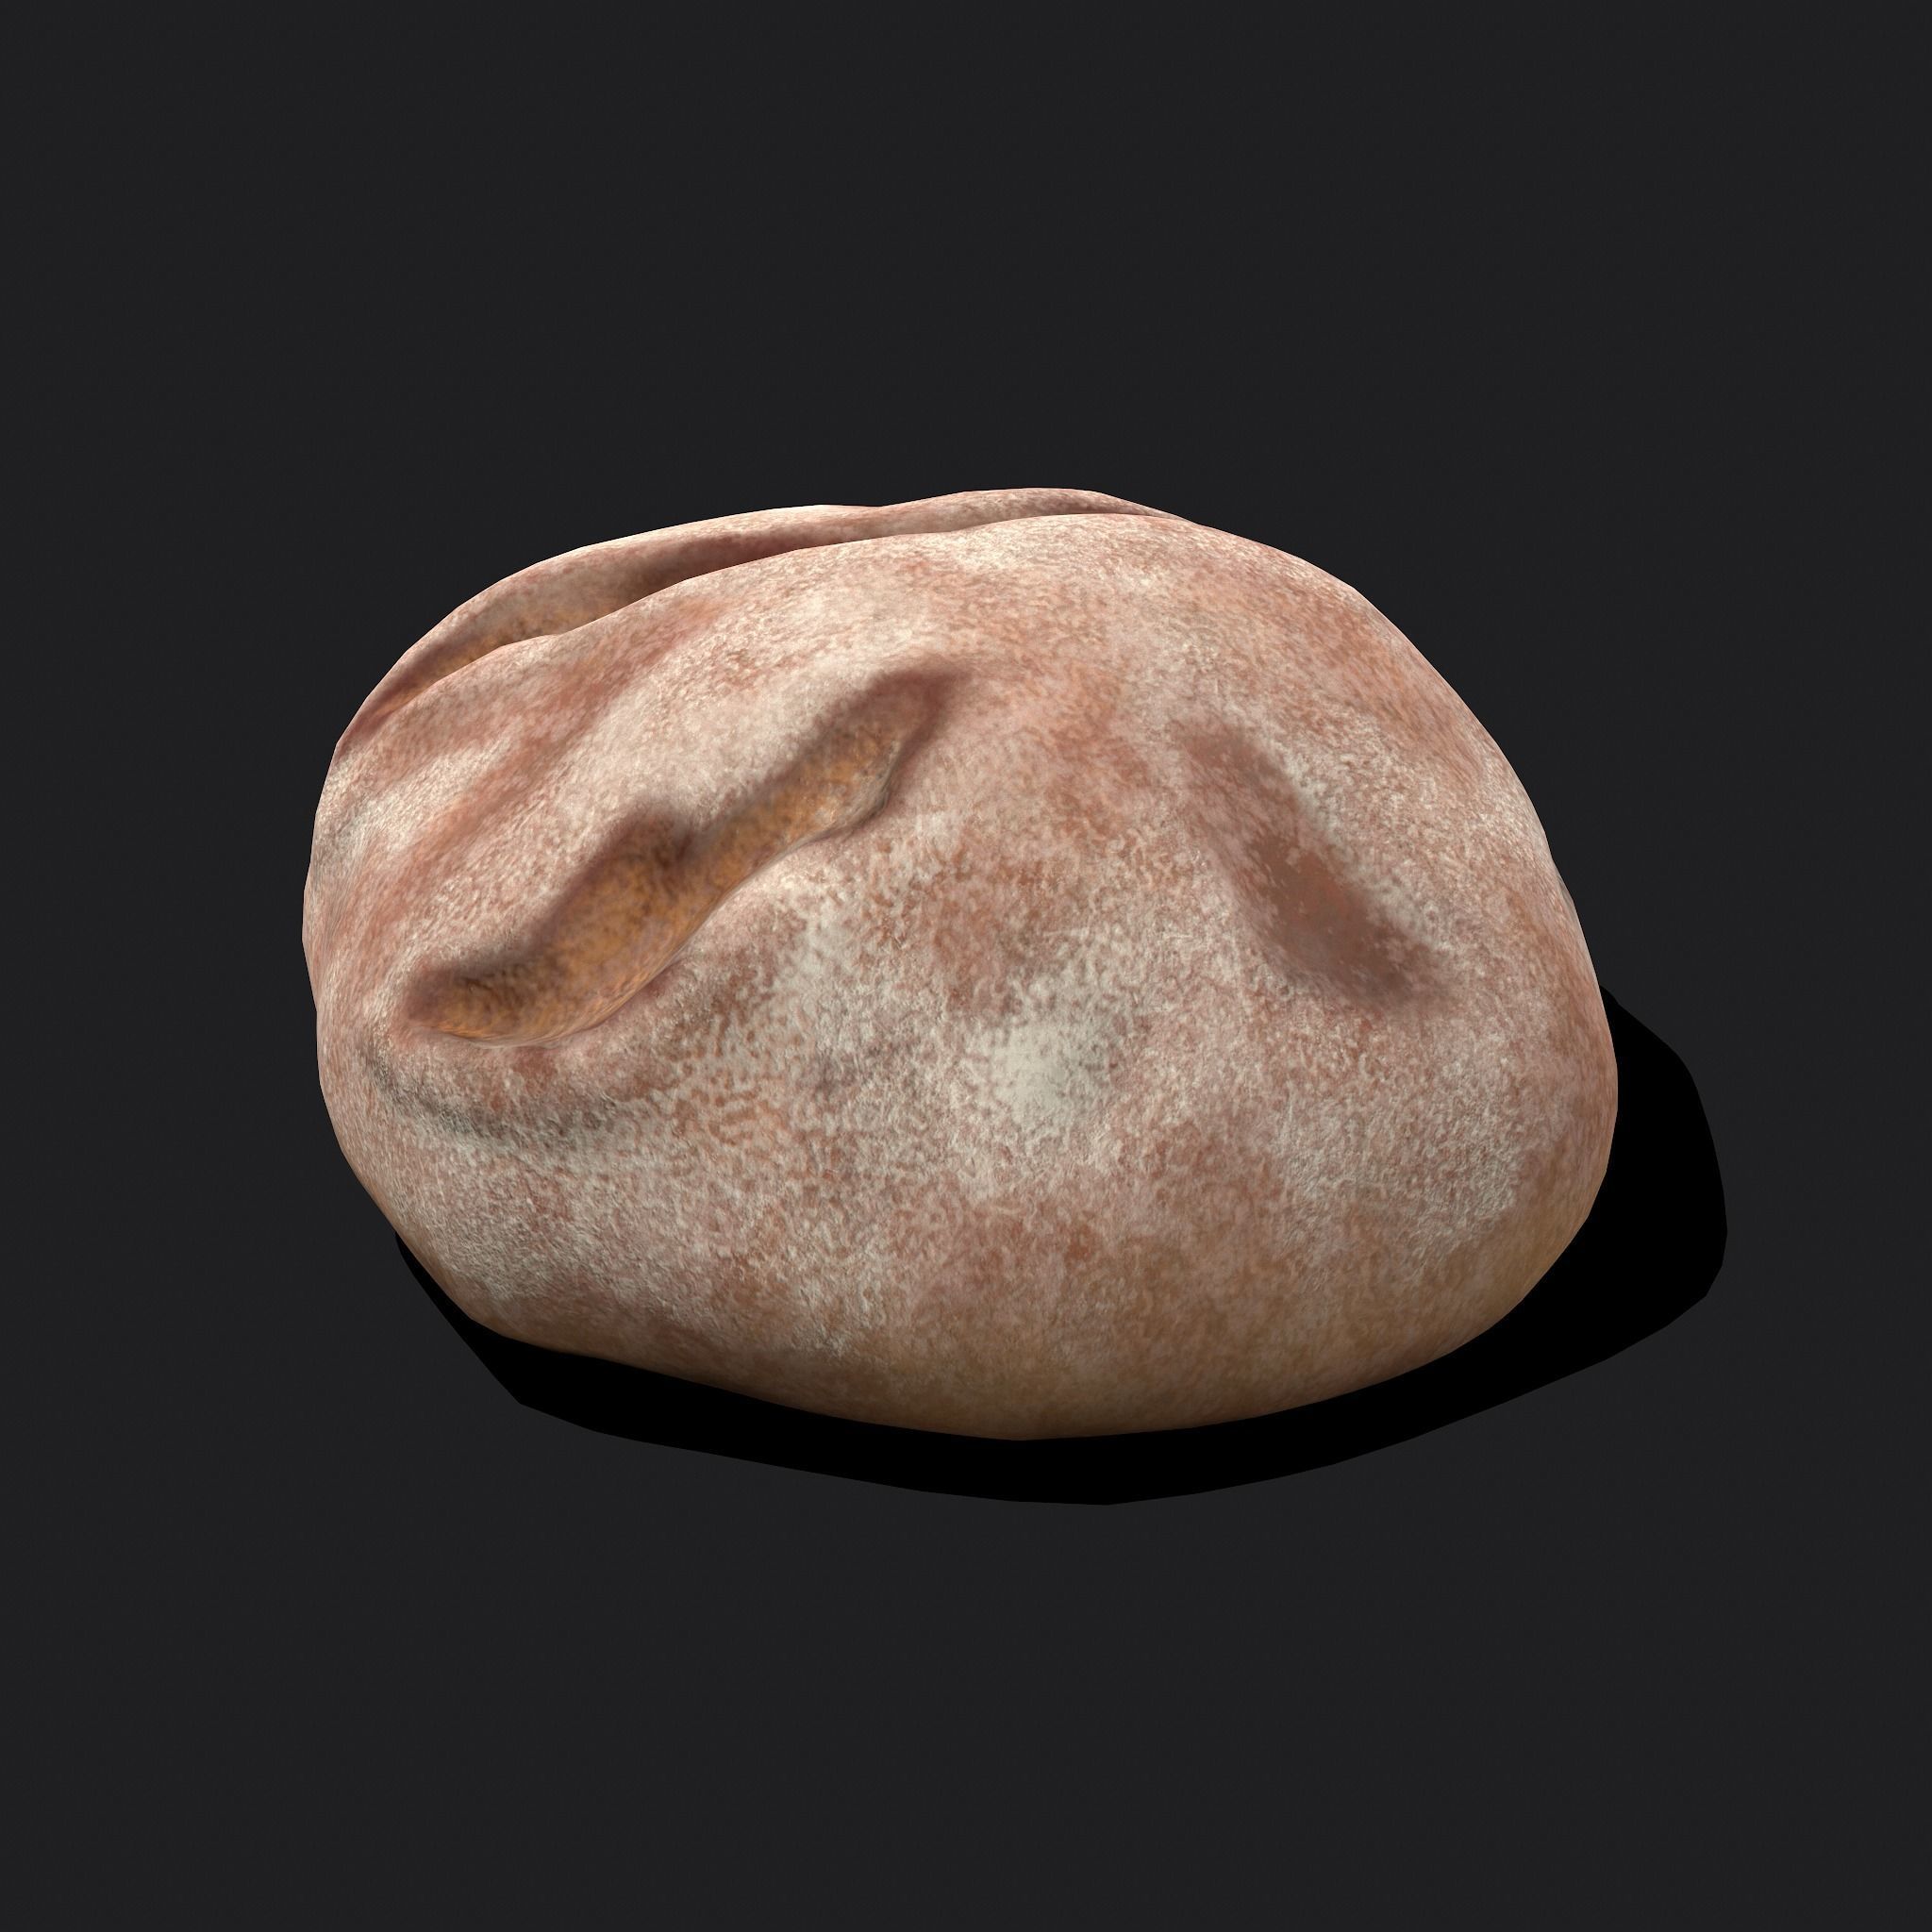 Medieval Bread Loaf